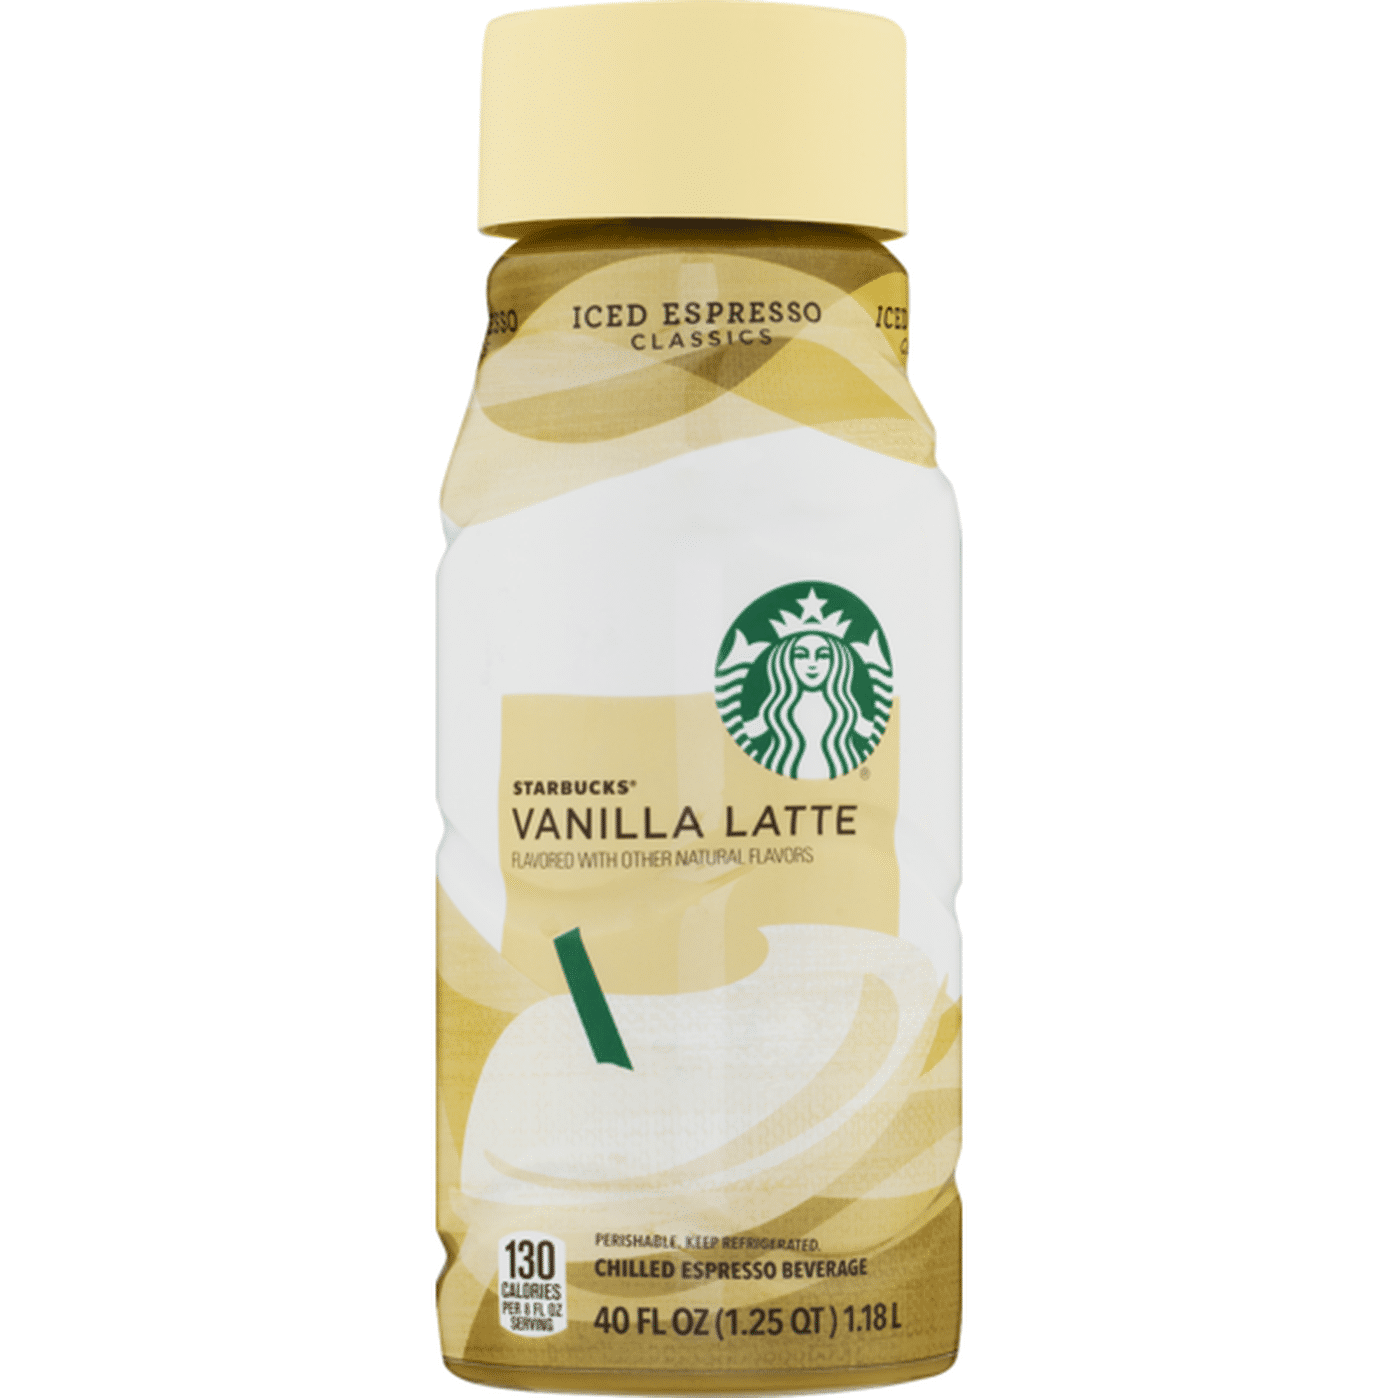 iced espresso vanilla latte starbucks